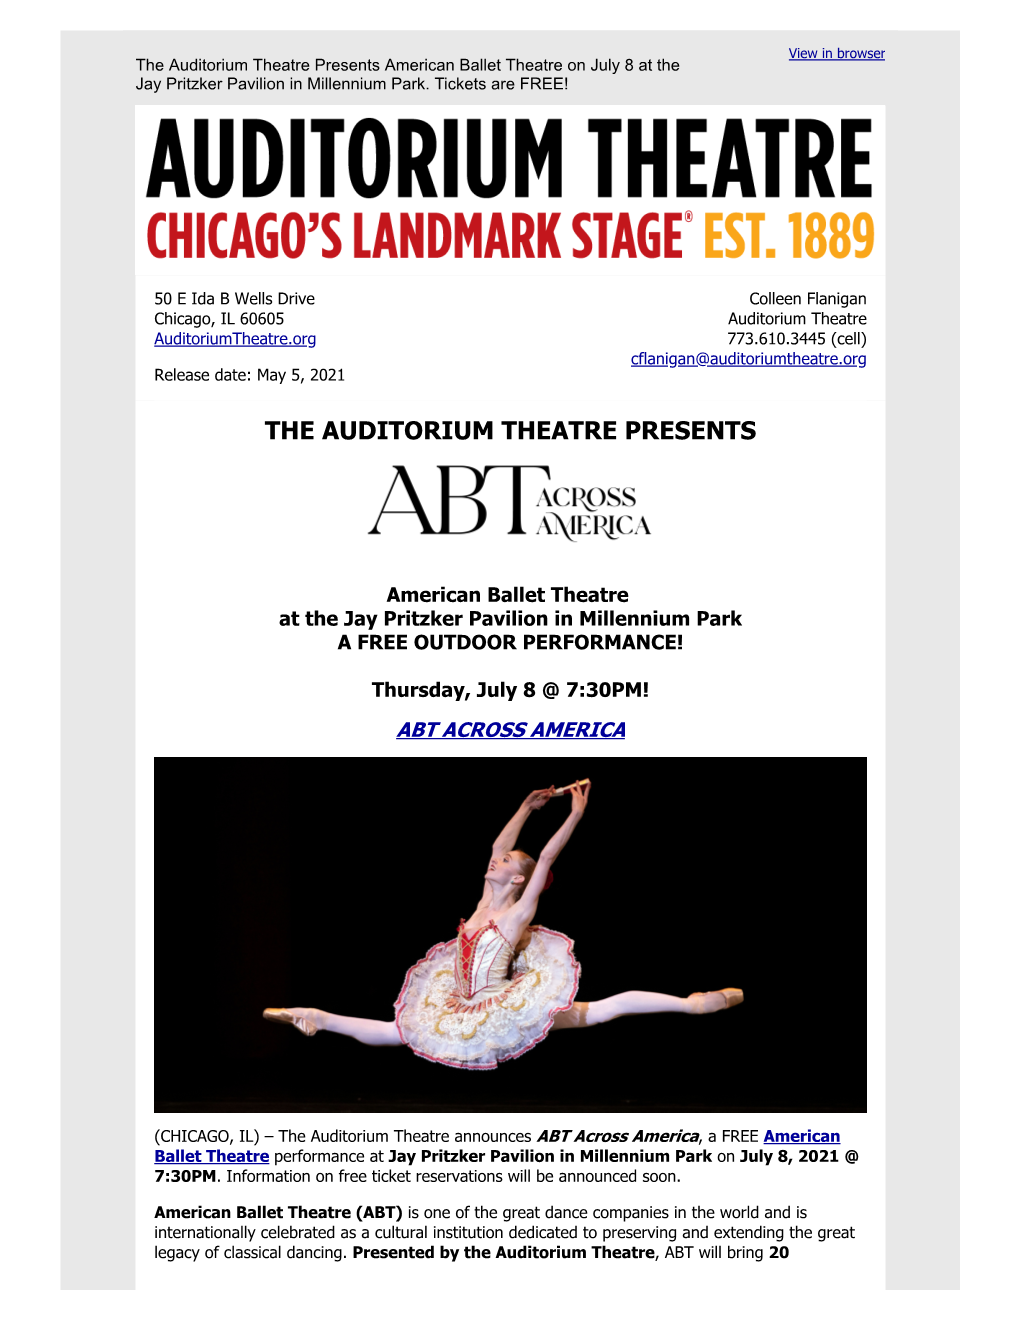 The Auditorium Theatre Presents ABT Across America